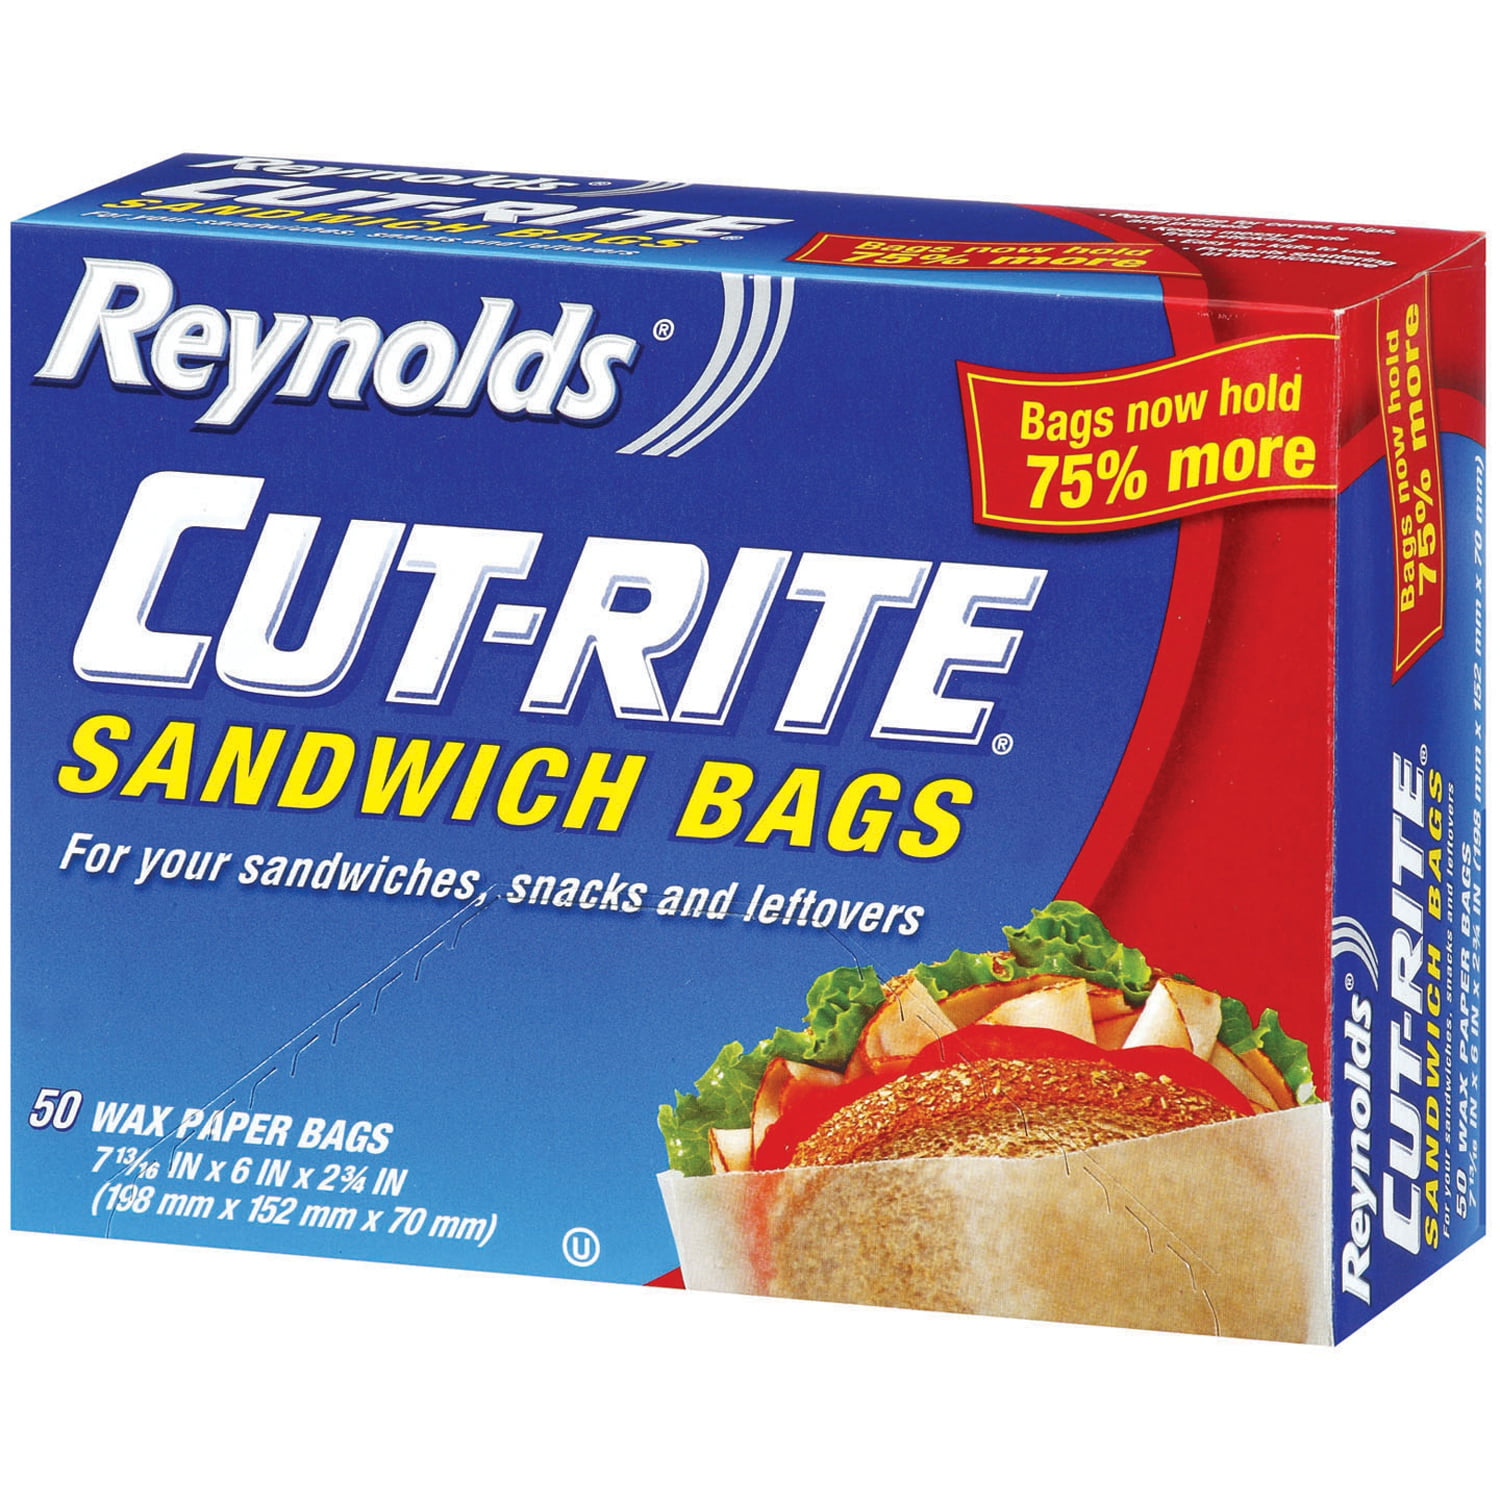 Reynolds® Cut-Rite® Wax Paper Sandwich Bags 50 ct Box